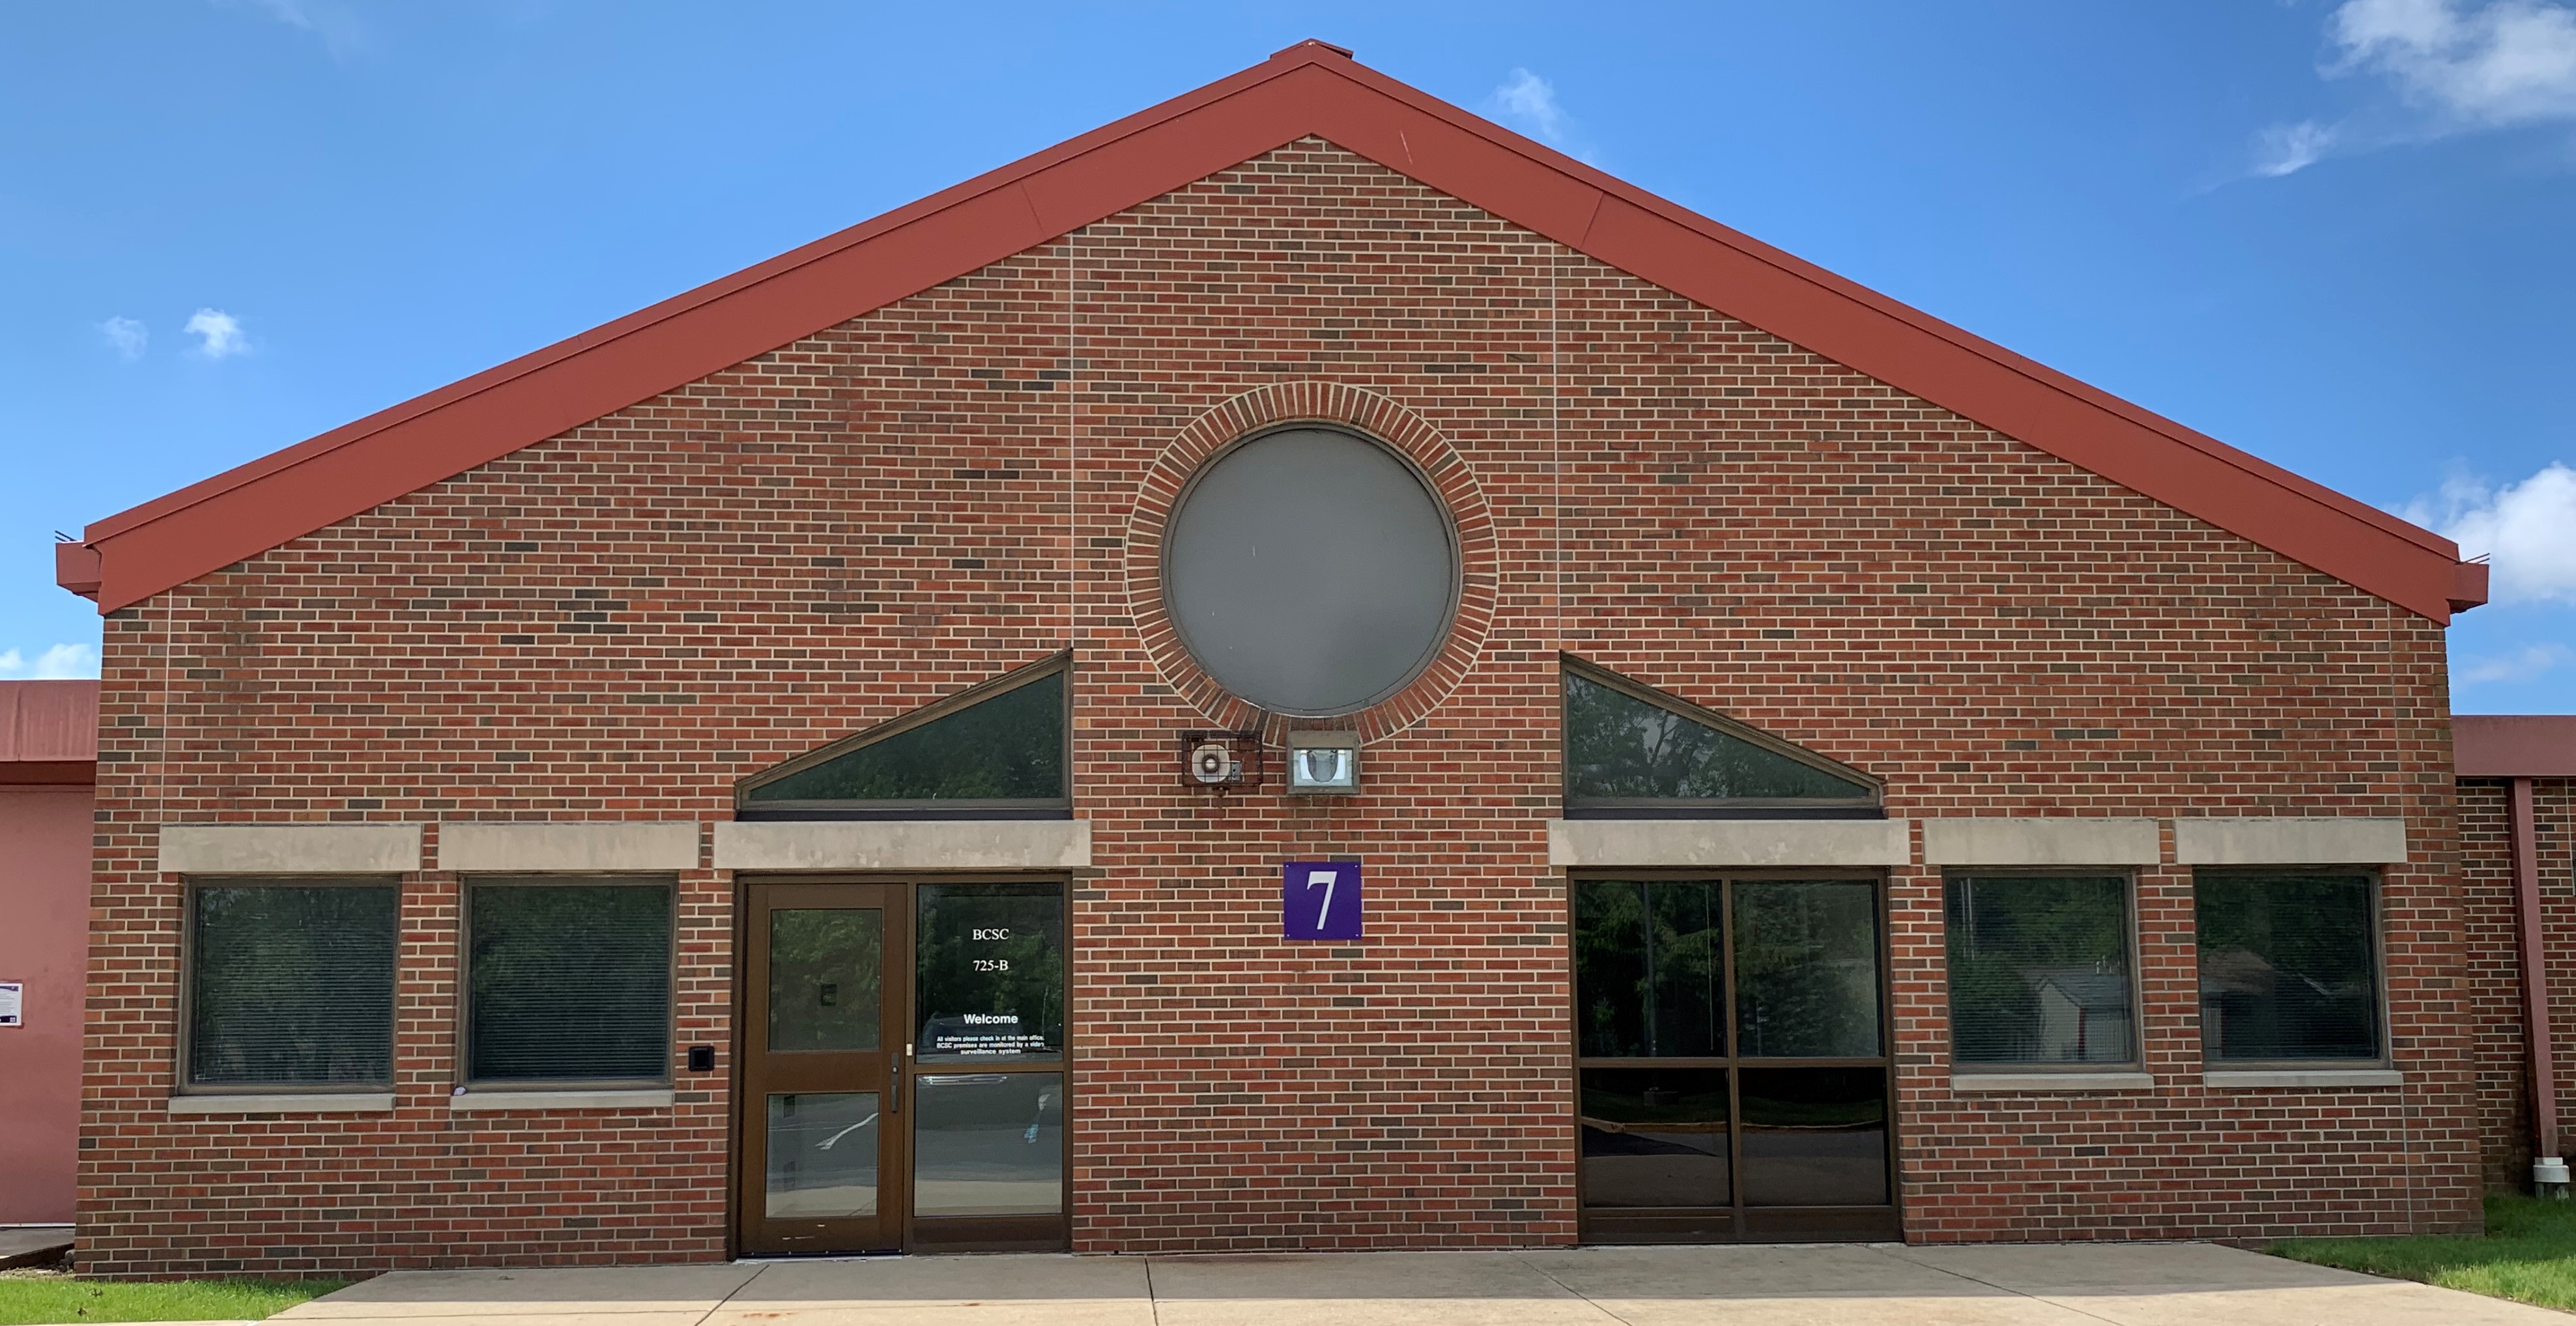 OPEN June 1, Additional Resource Center in Brownsburg